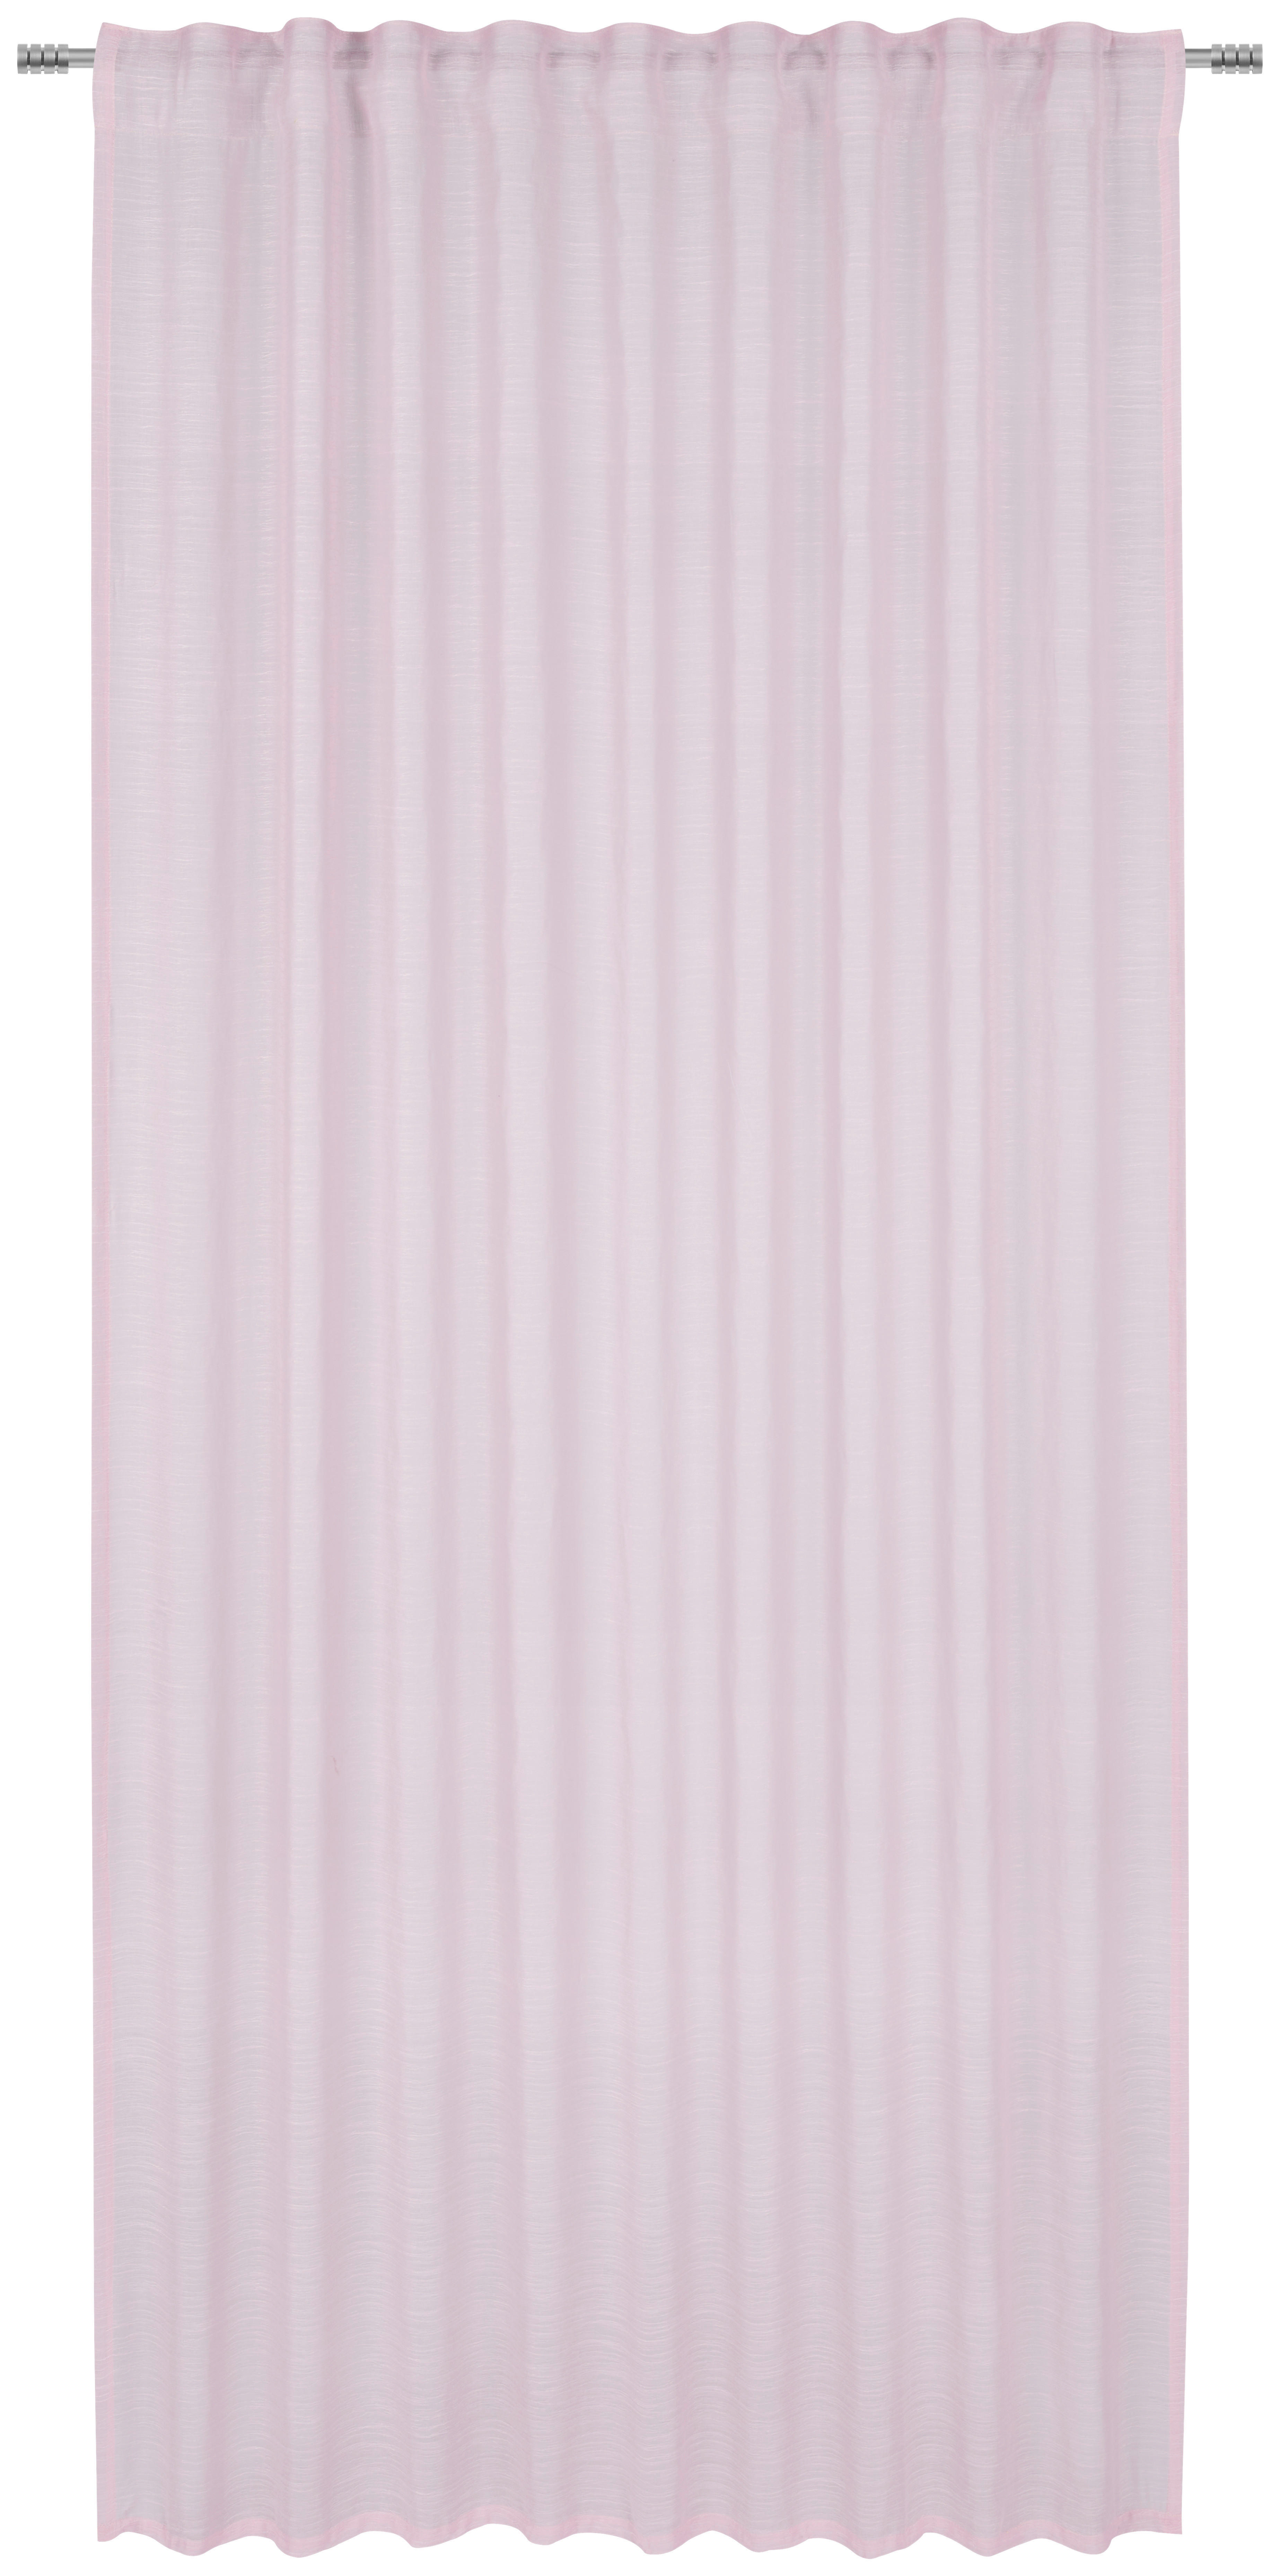 Perdea gata confecţionată semitransparent  - roz, Basics, textil (140/245cm) - Esposa